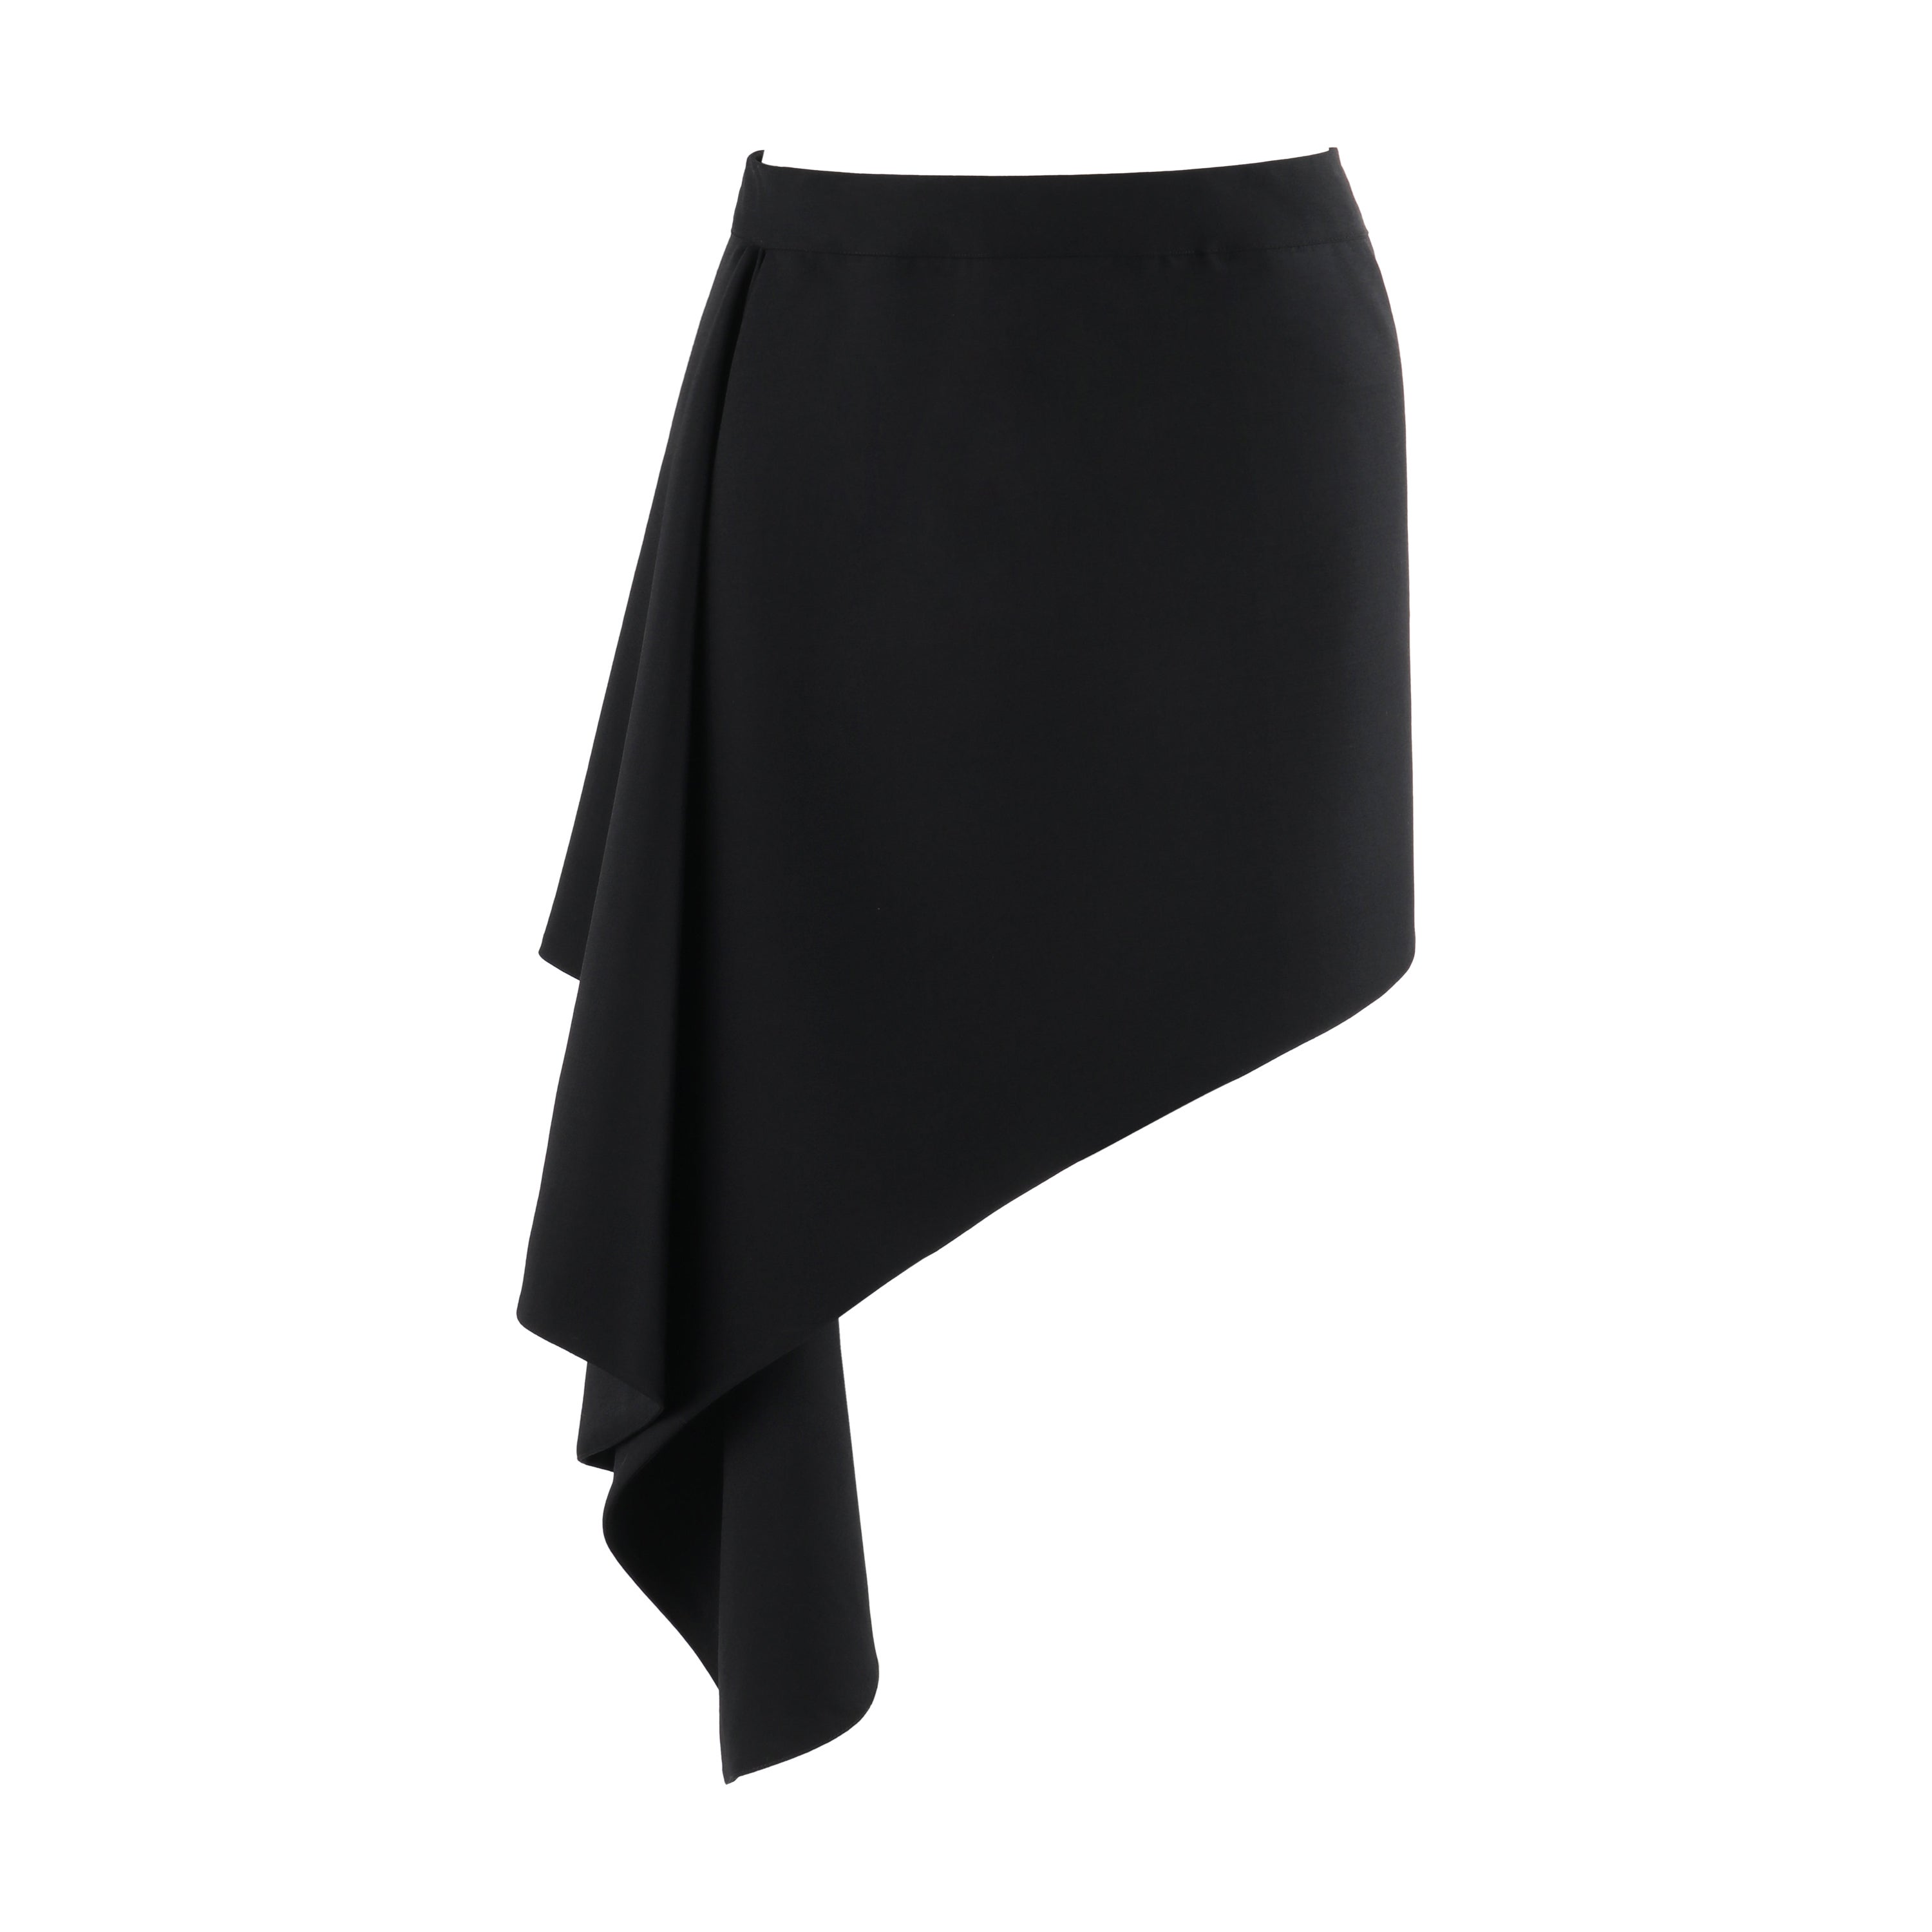 ALEXANDER McQUEEN S/S 1999 "No. 13" Black Asymmetrical Draped Ruffle Mini Skirt For Sale